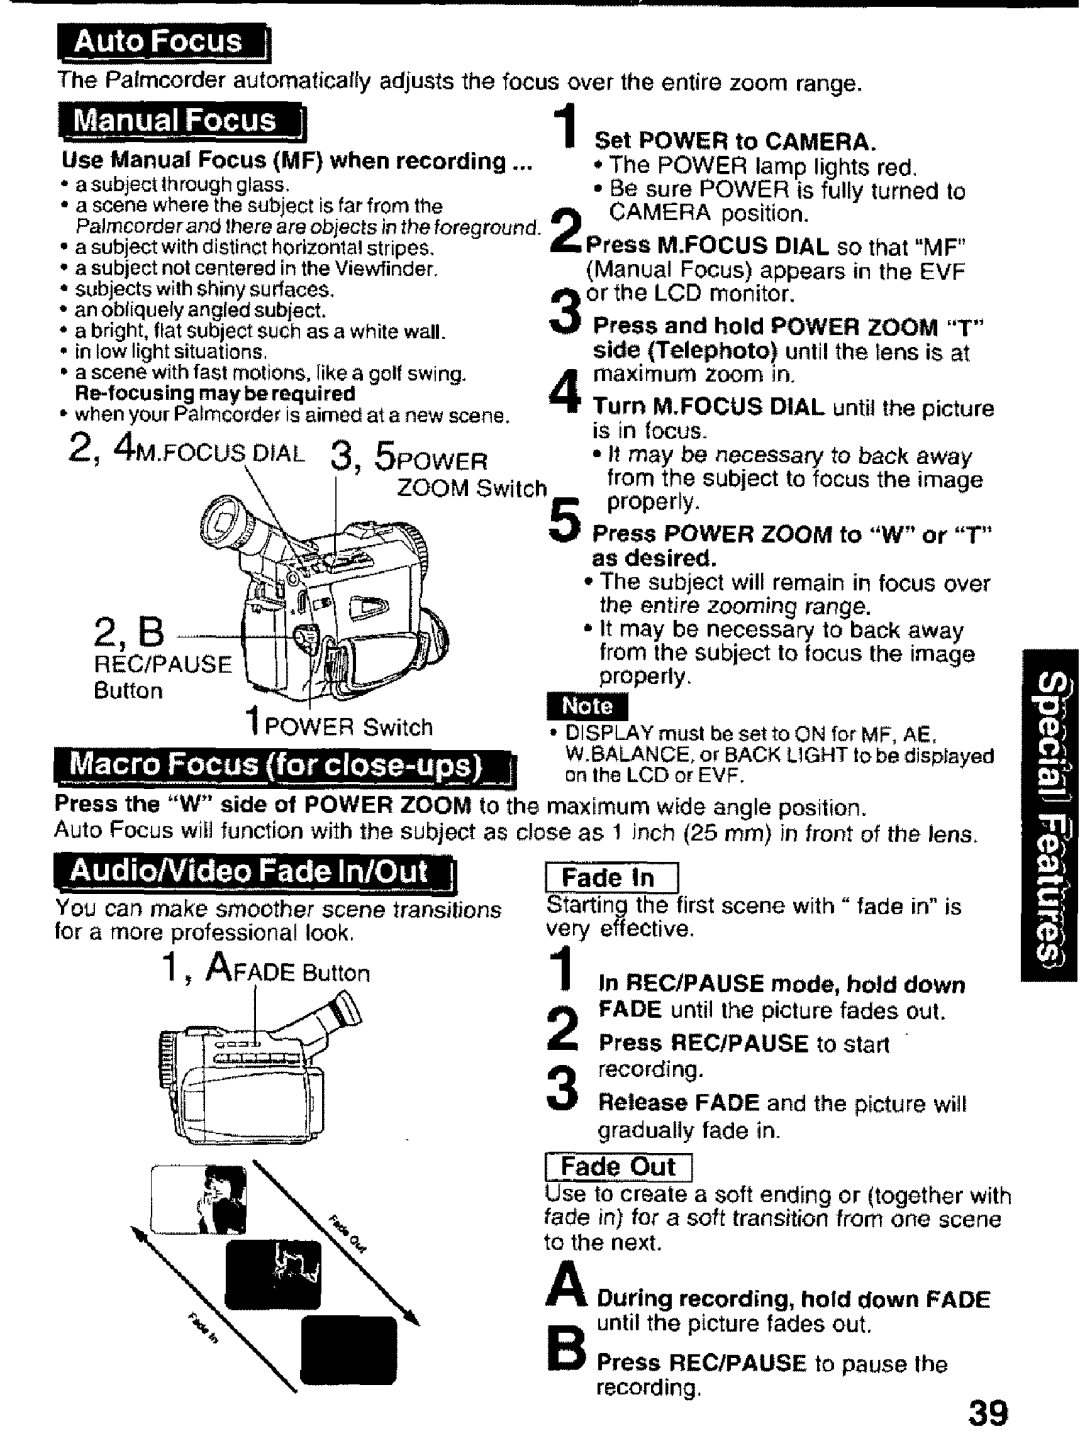 Panasonic PV-DV101 manual 1, AFADEButton, 2, 4M.FOCUStAL 3, 5POWER, 2, B 